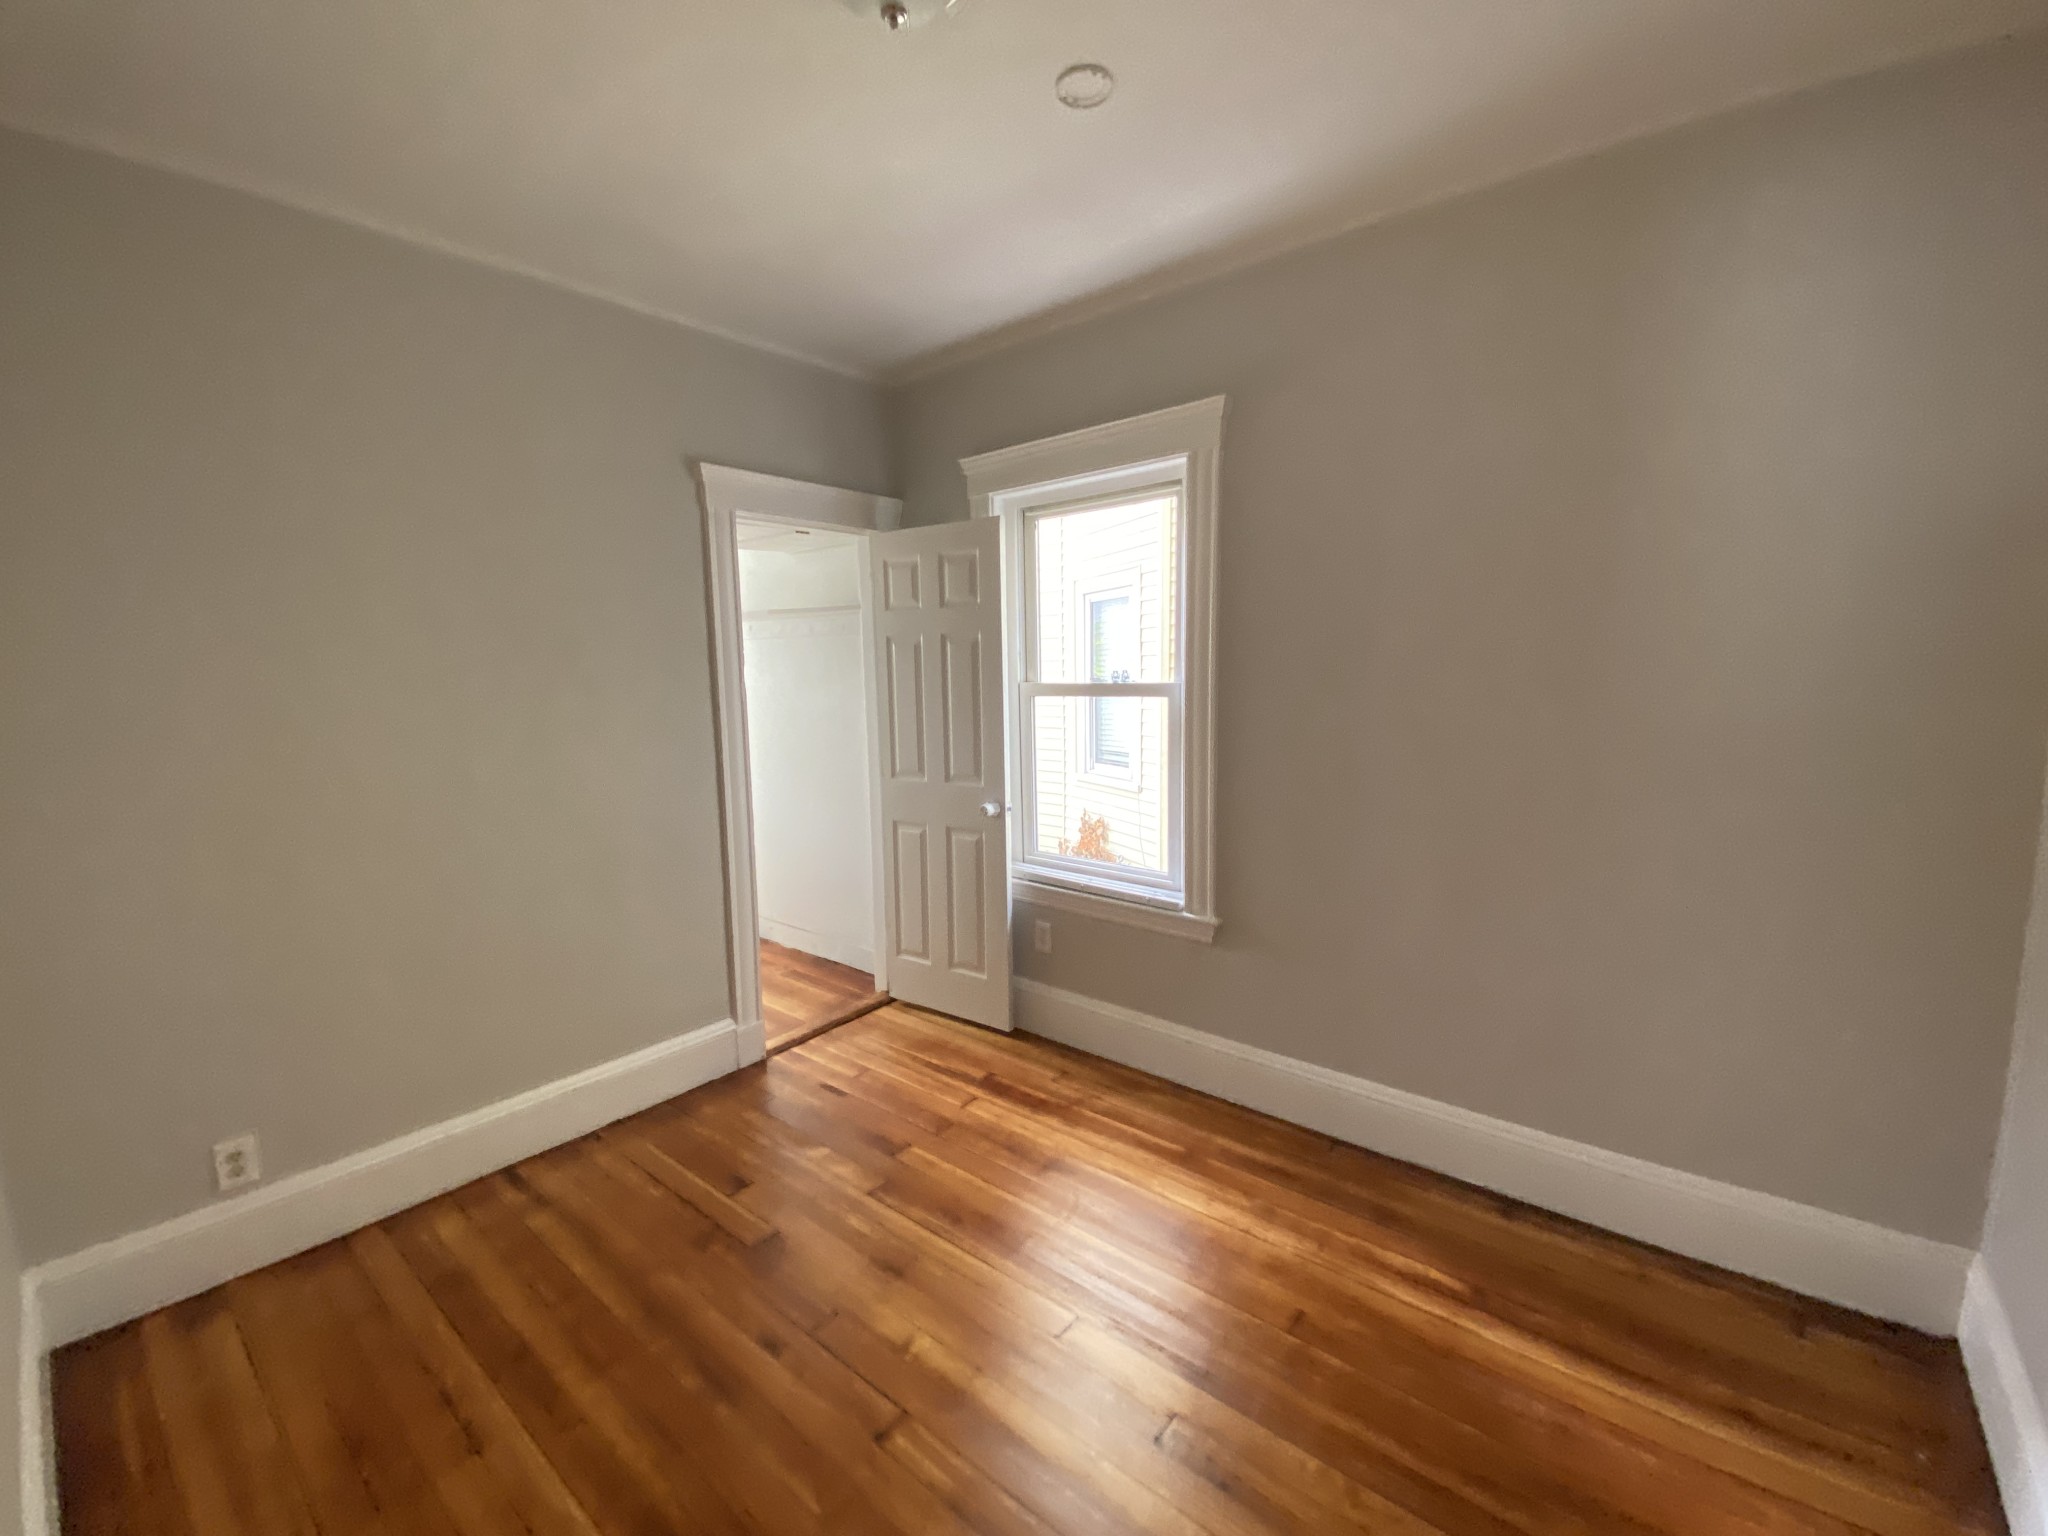 Photos of apartment on Capen,Boston MA 02124